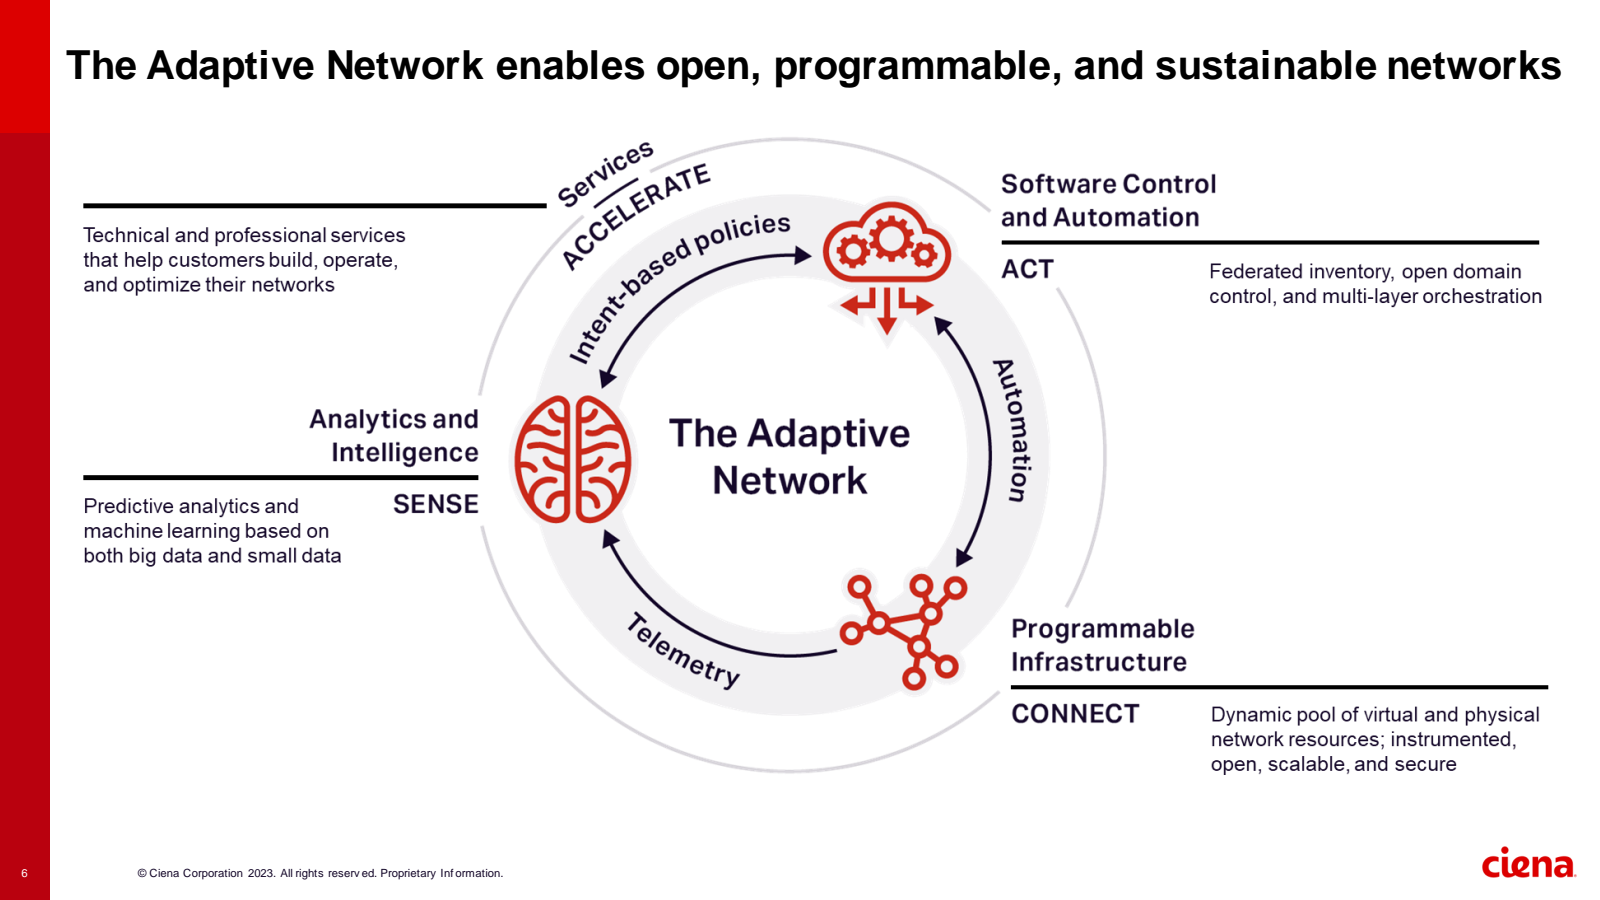 The Adaptive Network